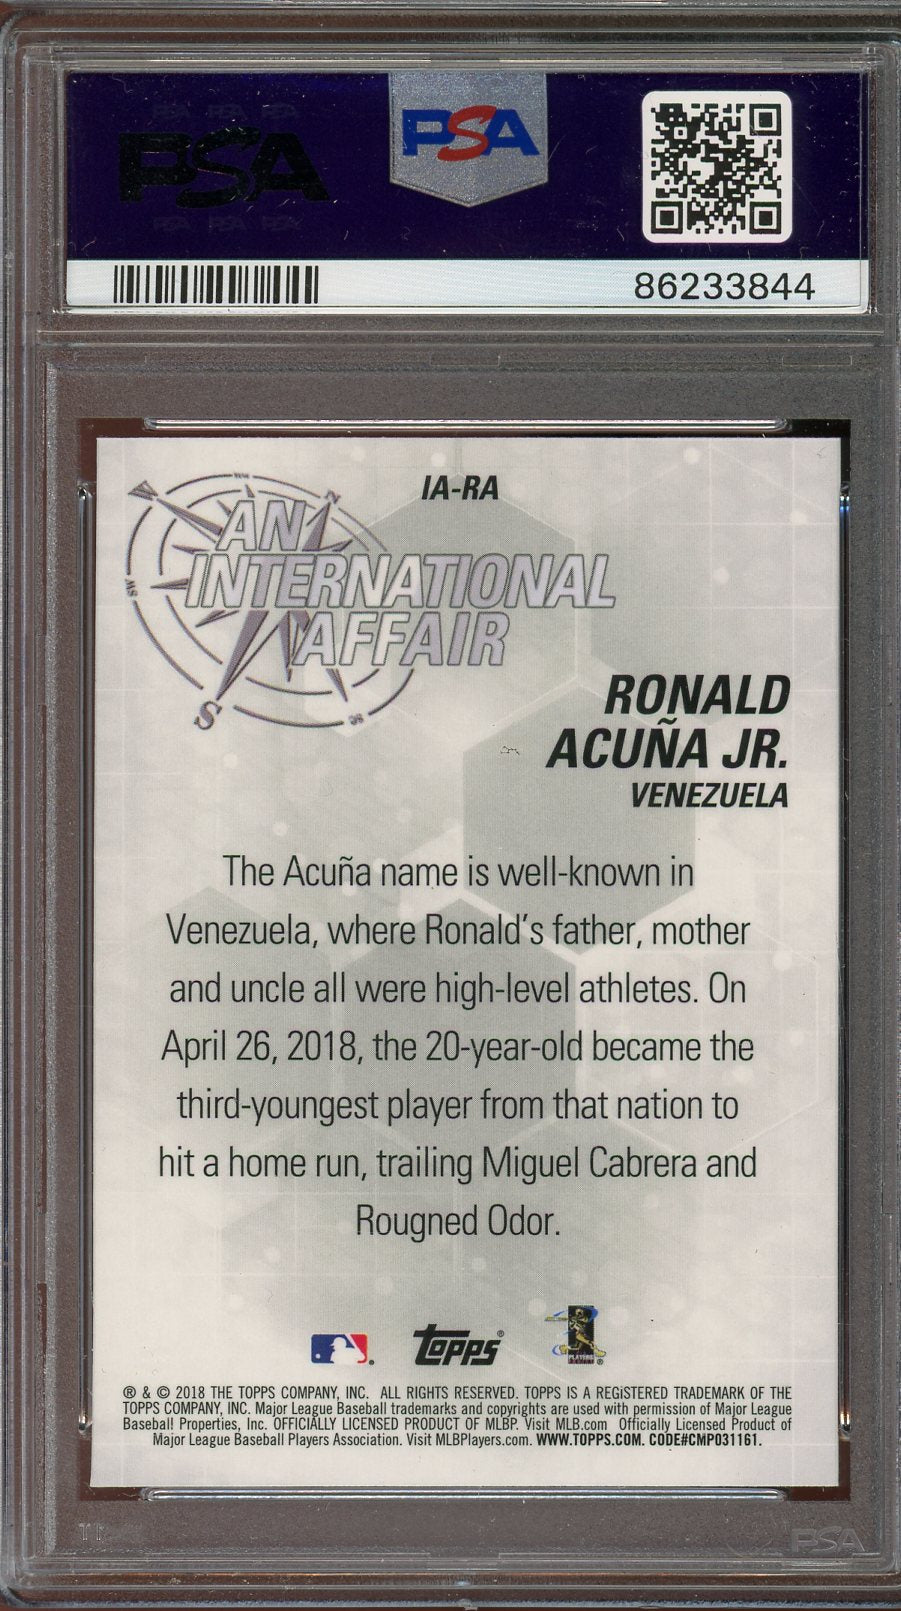 2018 Topps Chrome Ronald Acuna Jr. International Affair #IA-RA PSA 10 RC